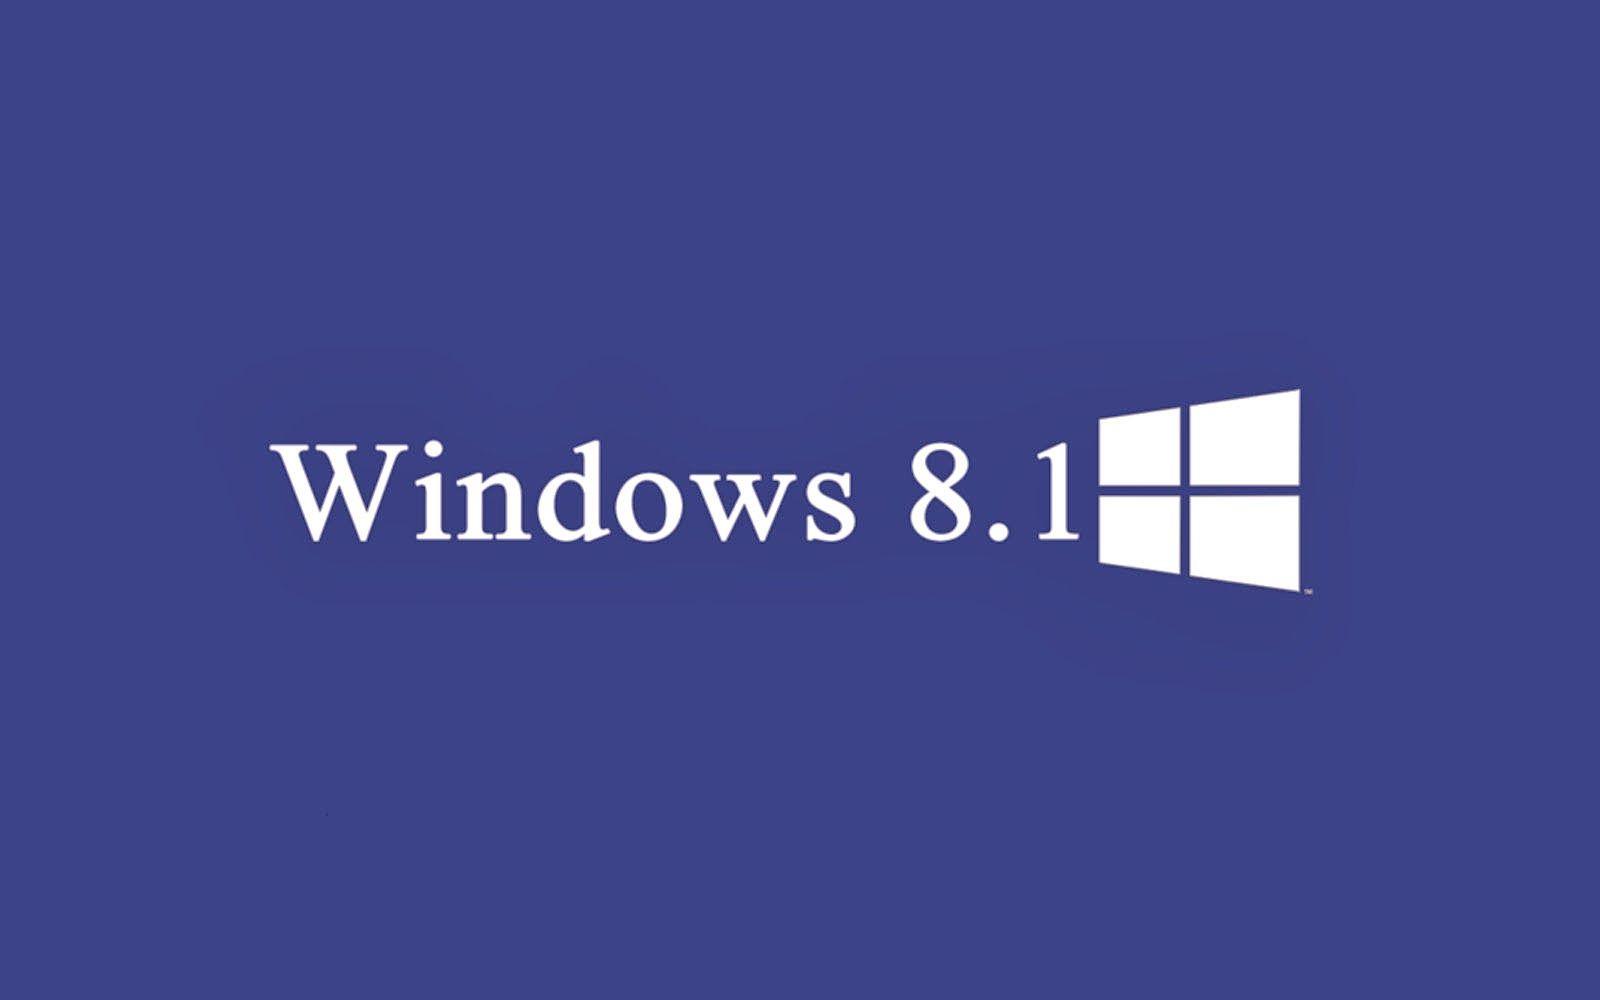 Windows 8.1 Wallpaper, Picture, Image